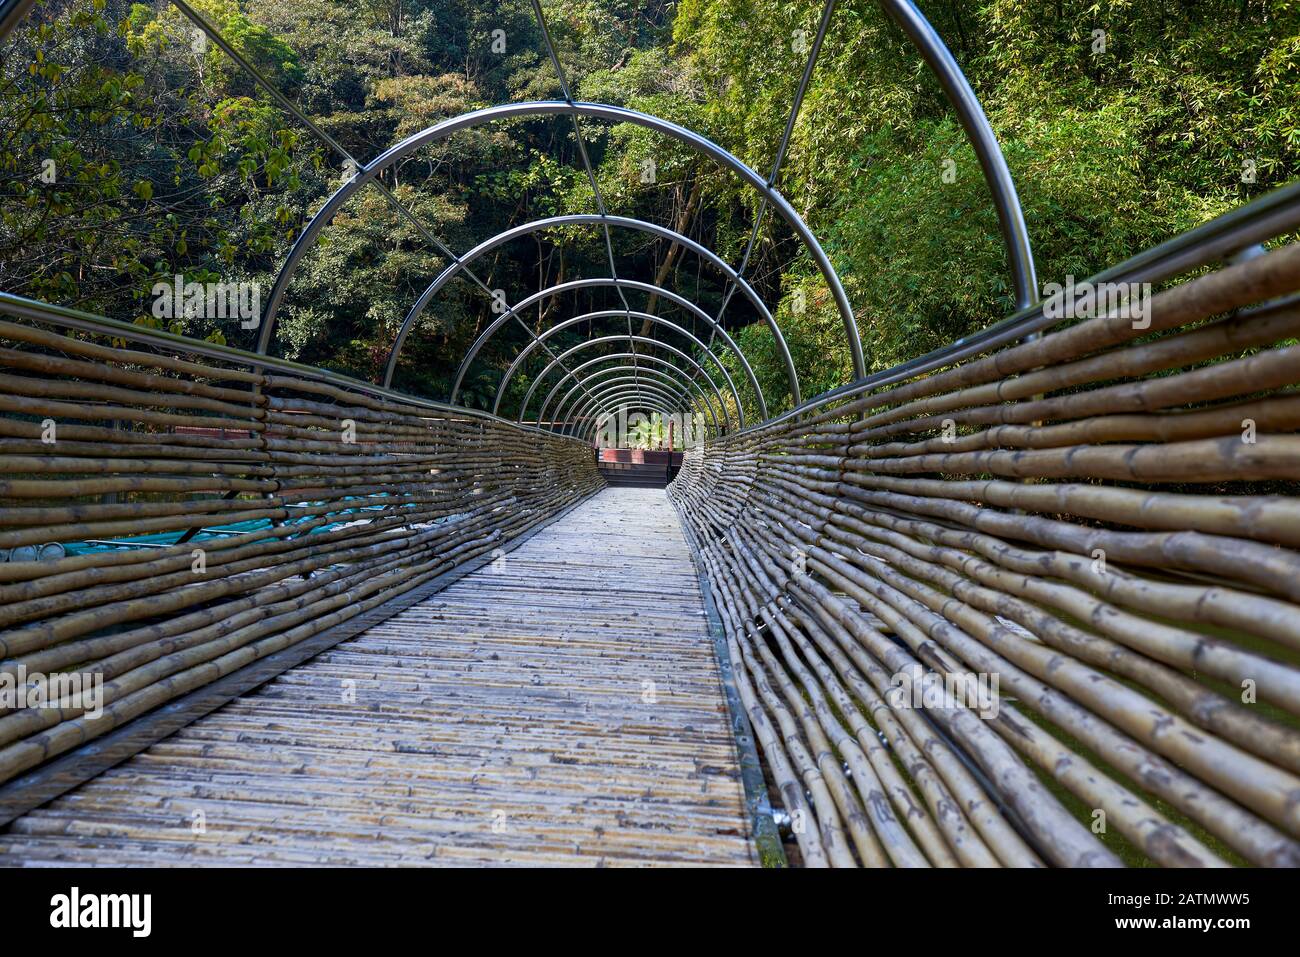 Bamboo bridge design over the river in the park Stock Photo